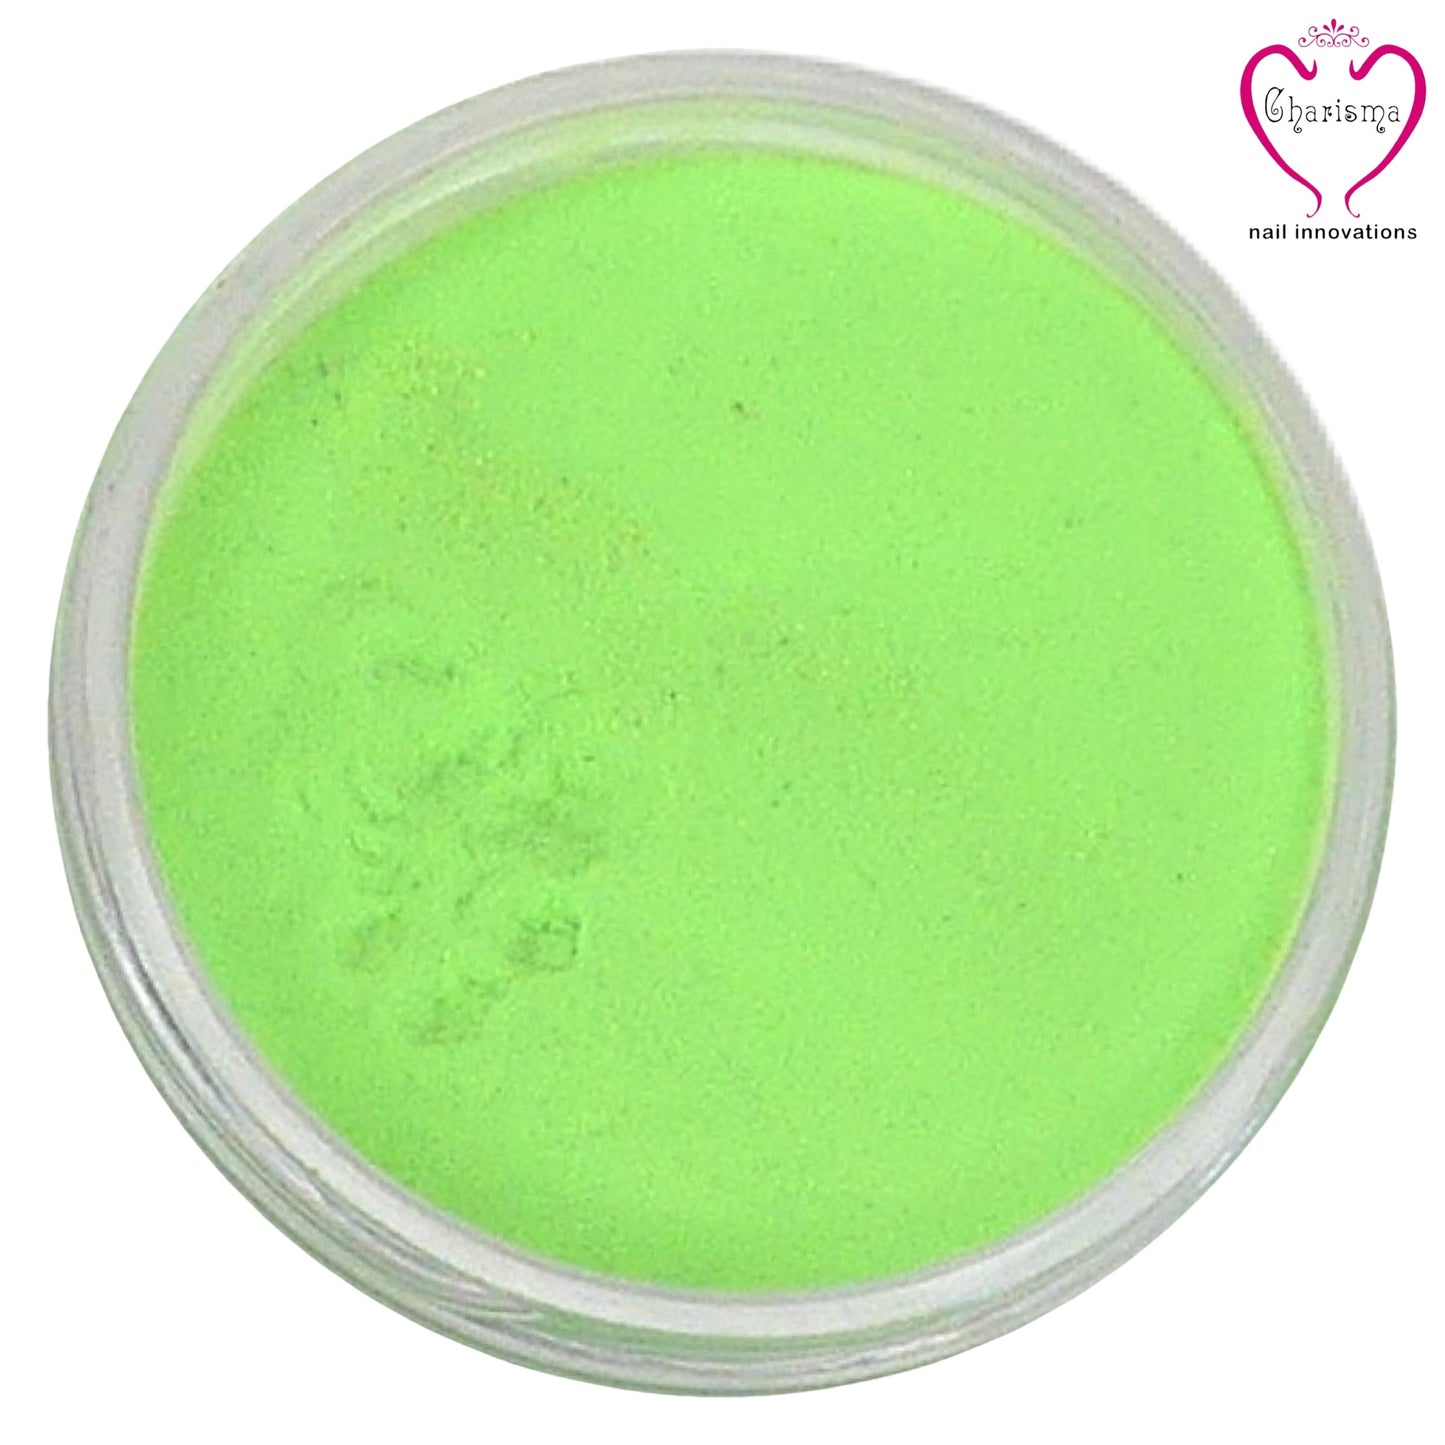 Charisma Nail 3D Acrylic Powder -  Bright Green #3 (1/2oz) - My Little Nail Art Shop